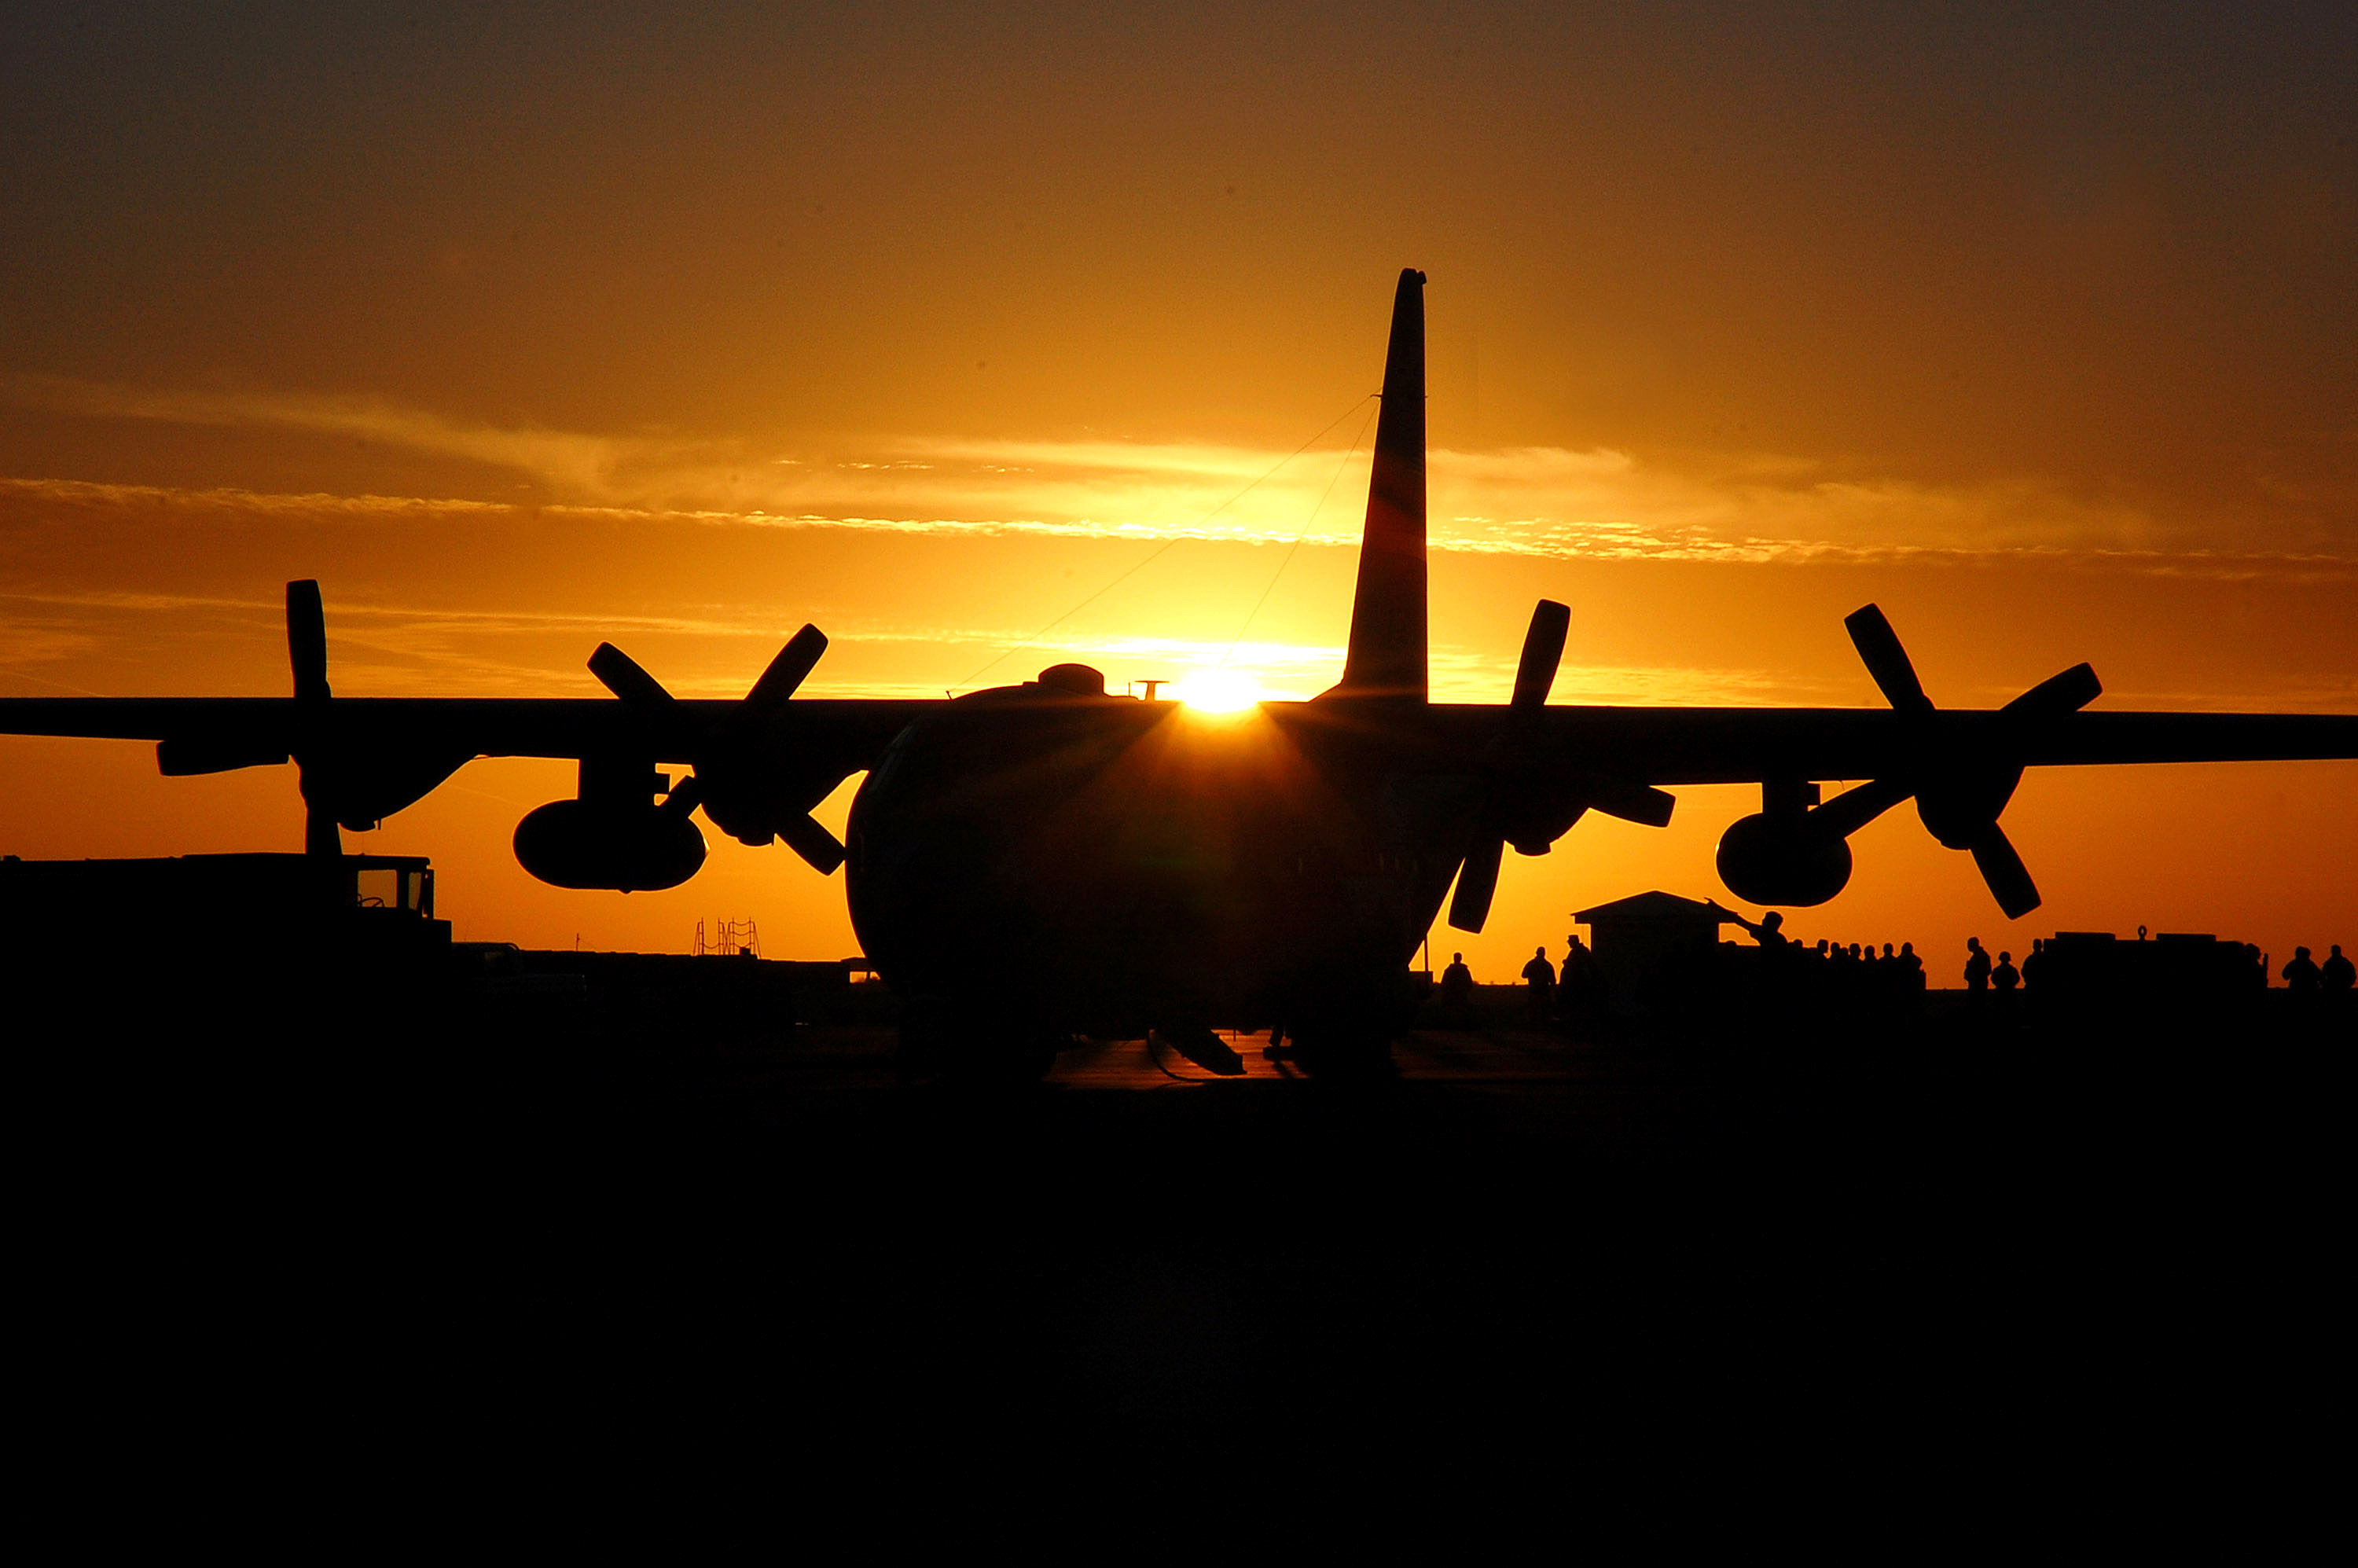 Free Public Domain Image  C 130 Hercules Aircraft At Sunset   Acclaim